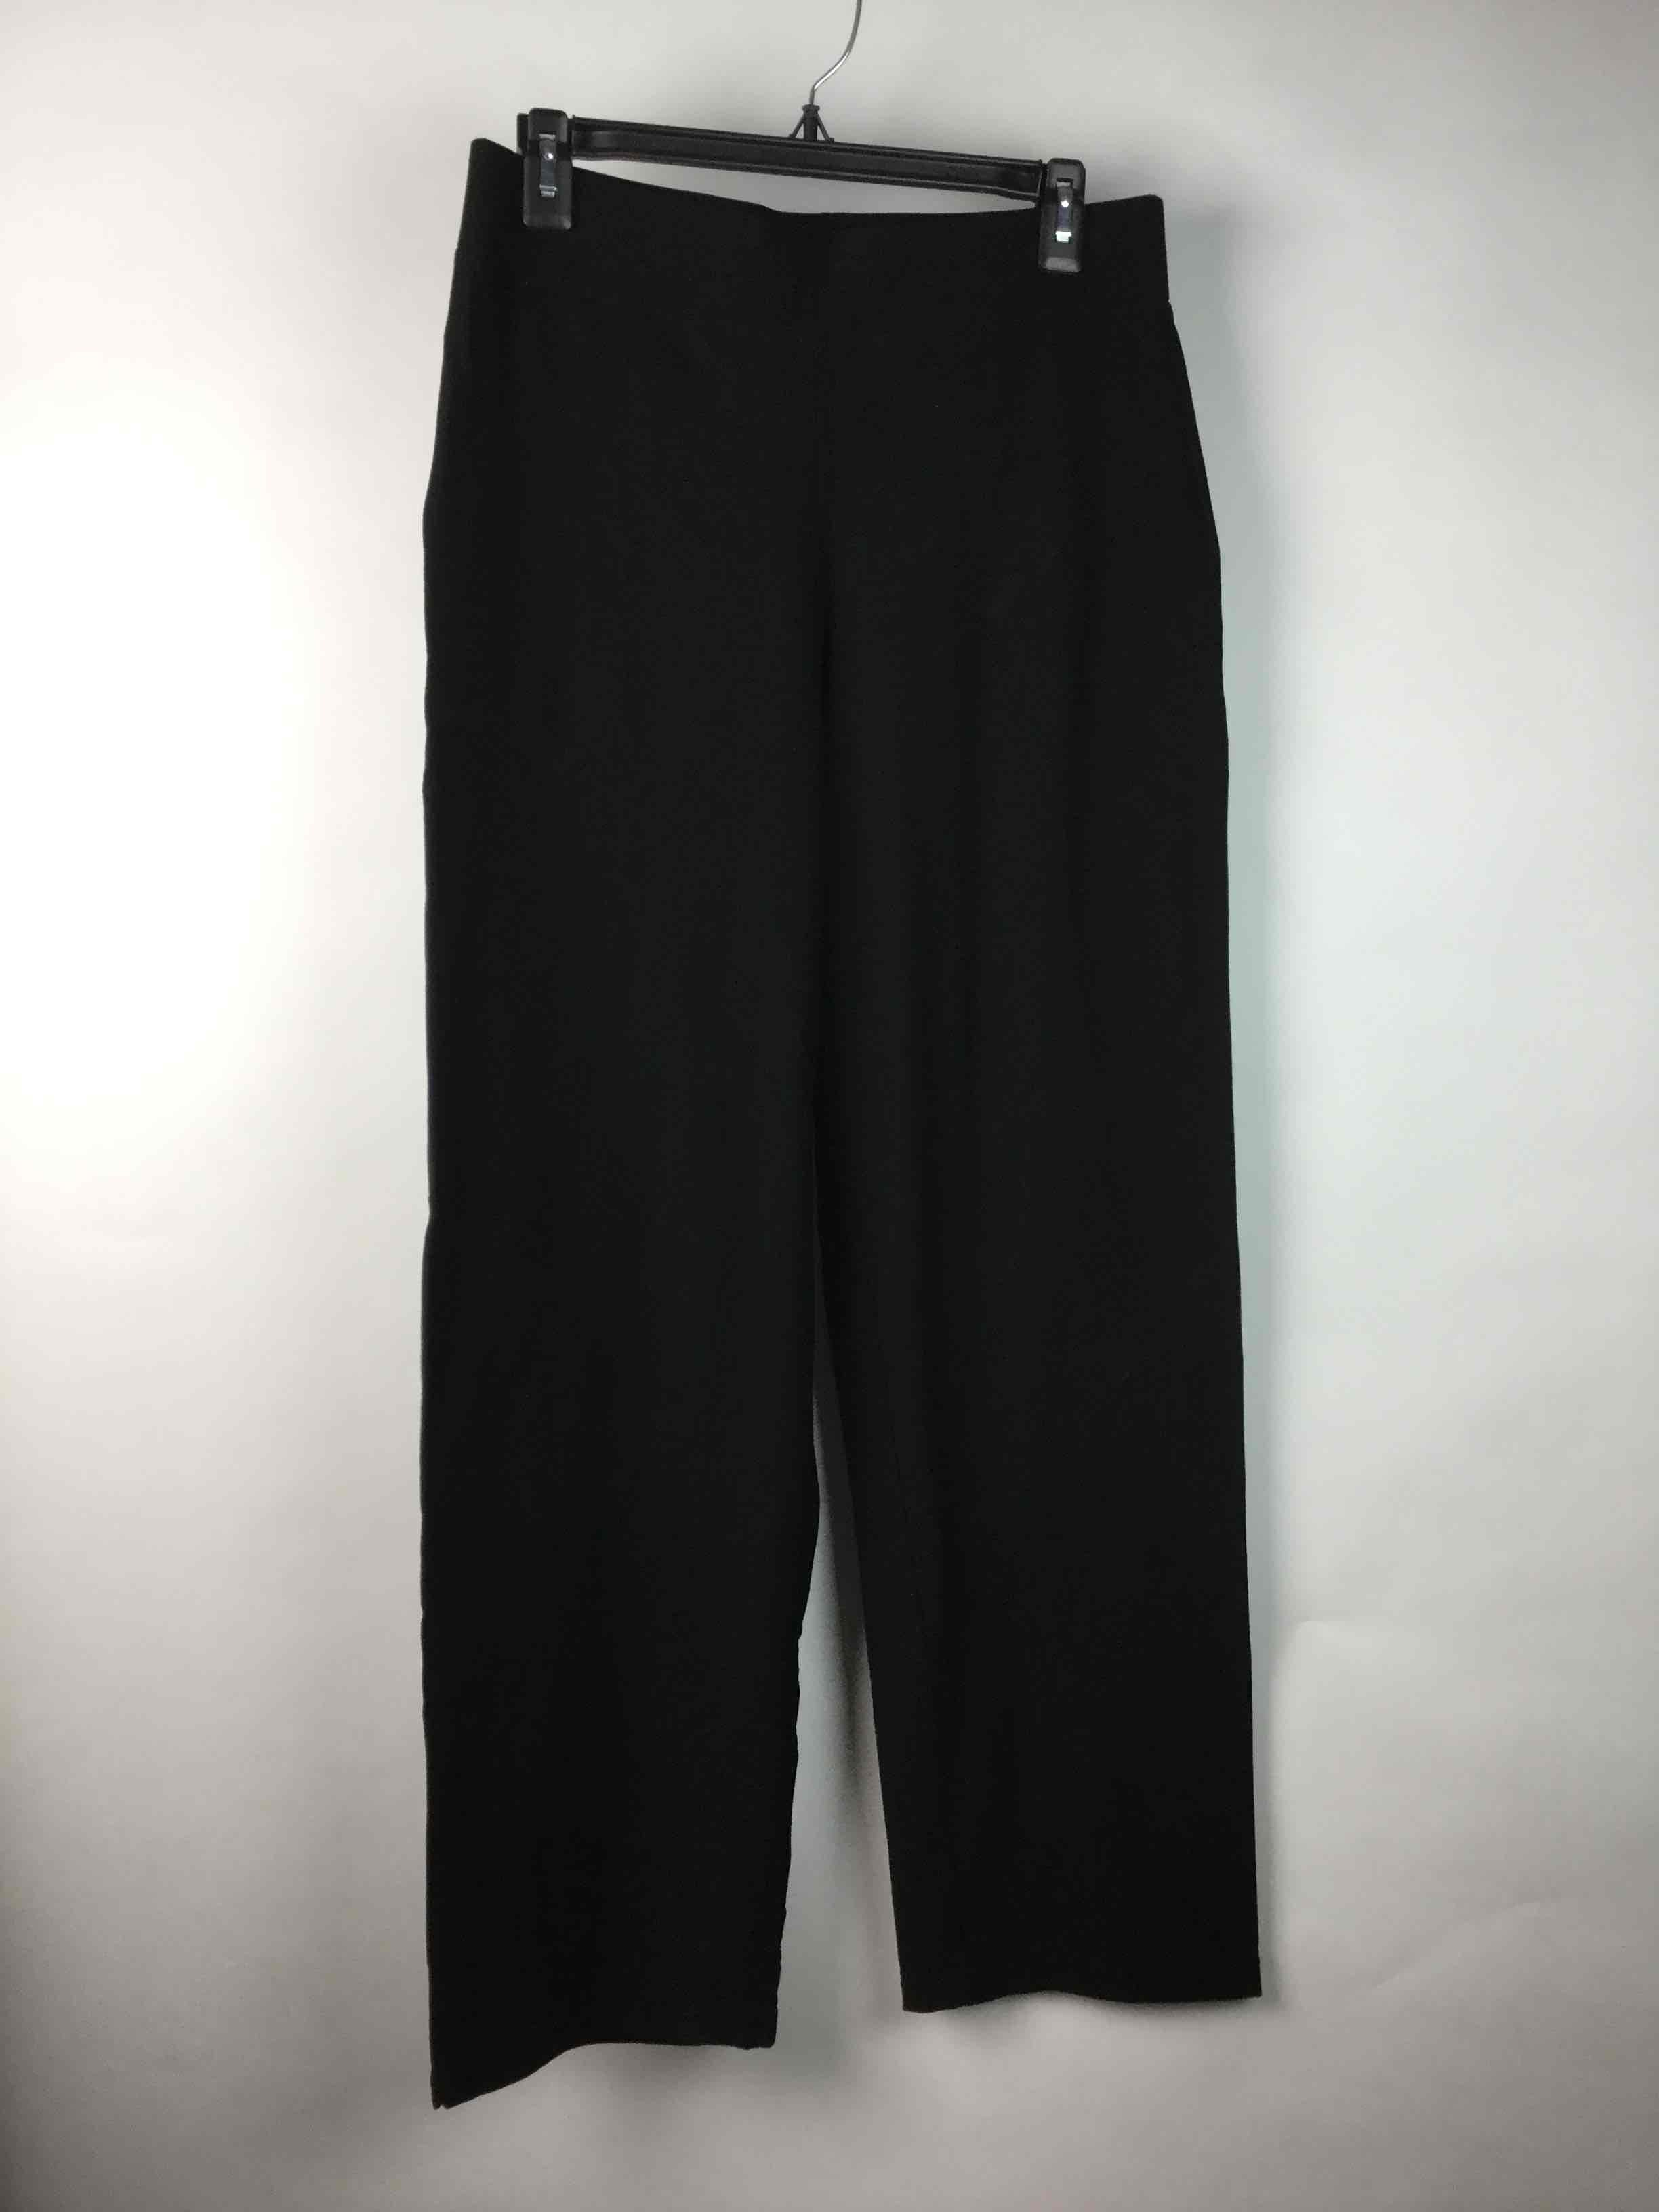 Eileen Fisher Black Mid Rise Straight Leg Loose Pants Size S | eBay